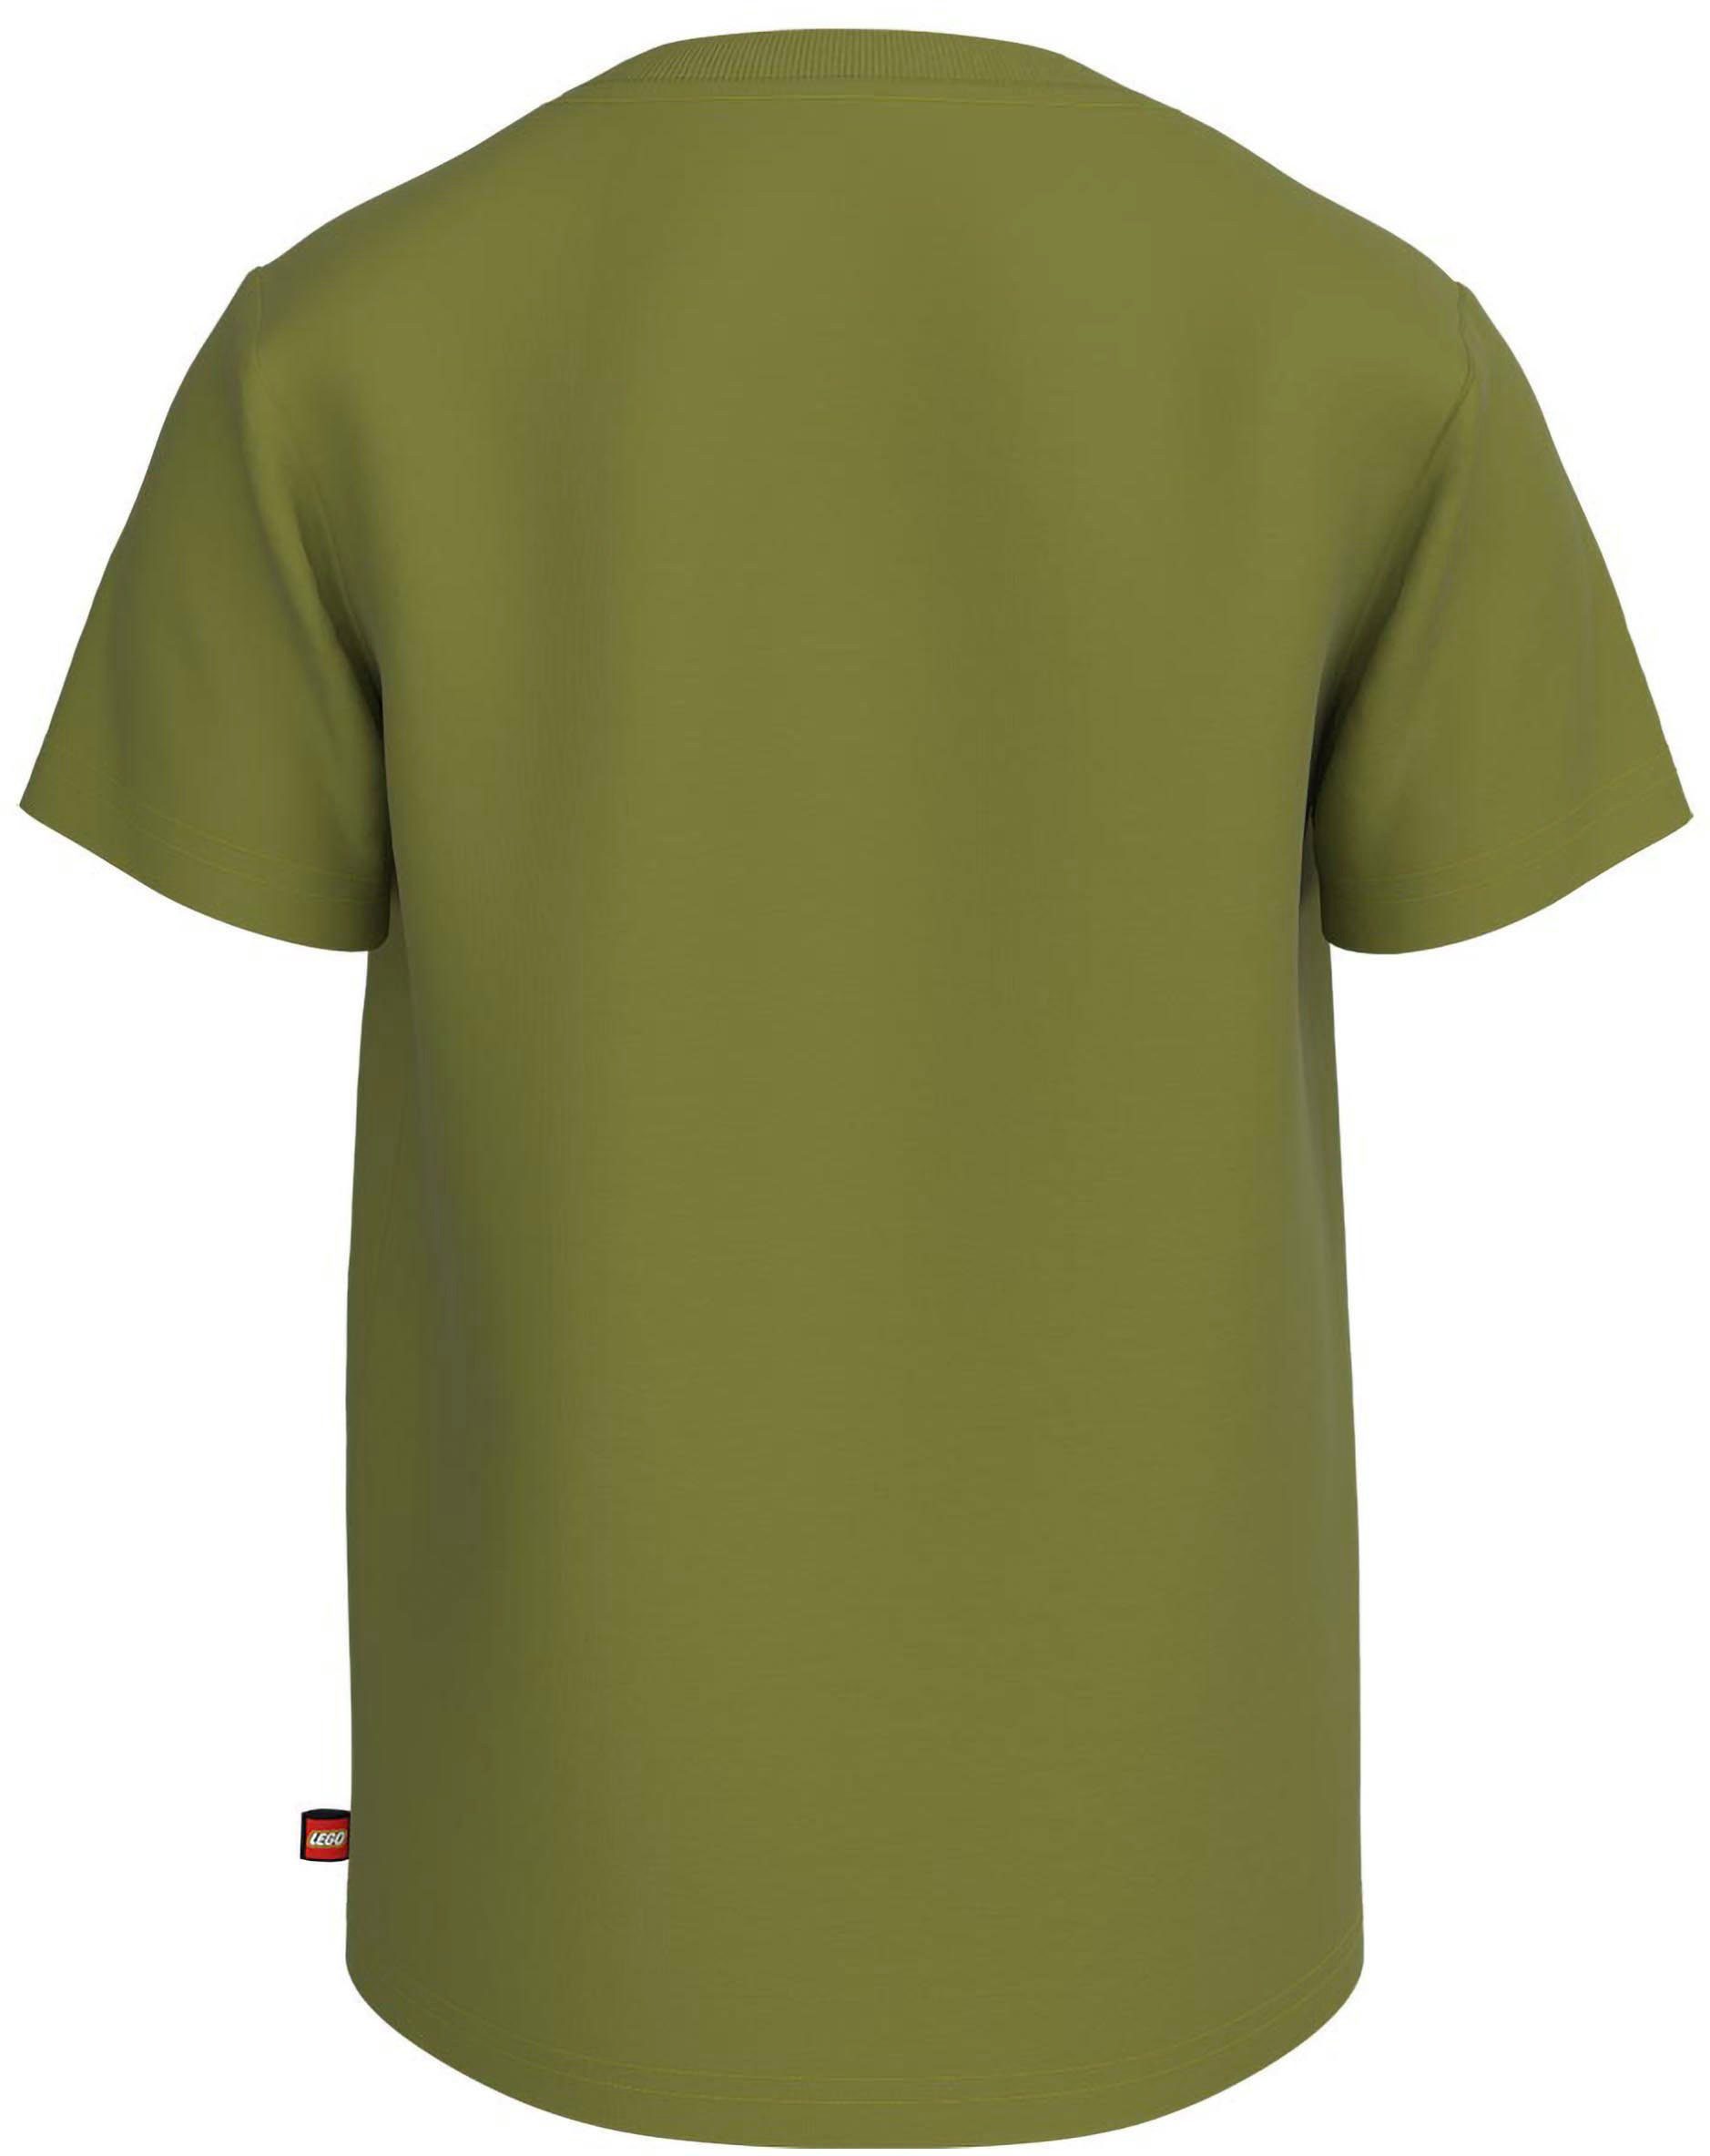 Wear LEGO® Print-Shirt olive green